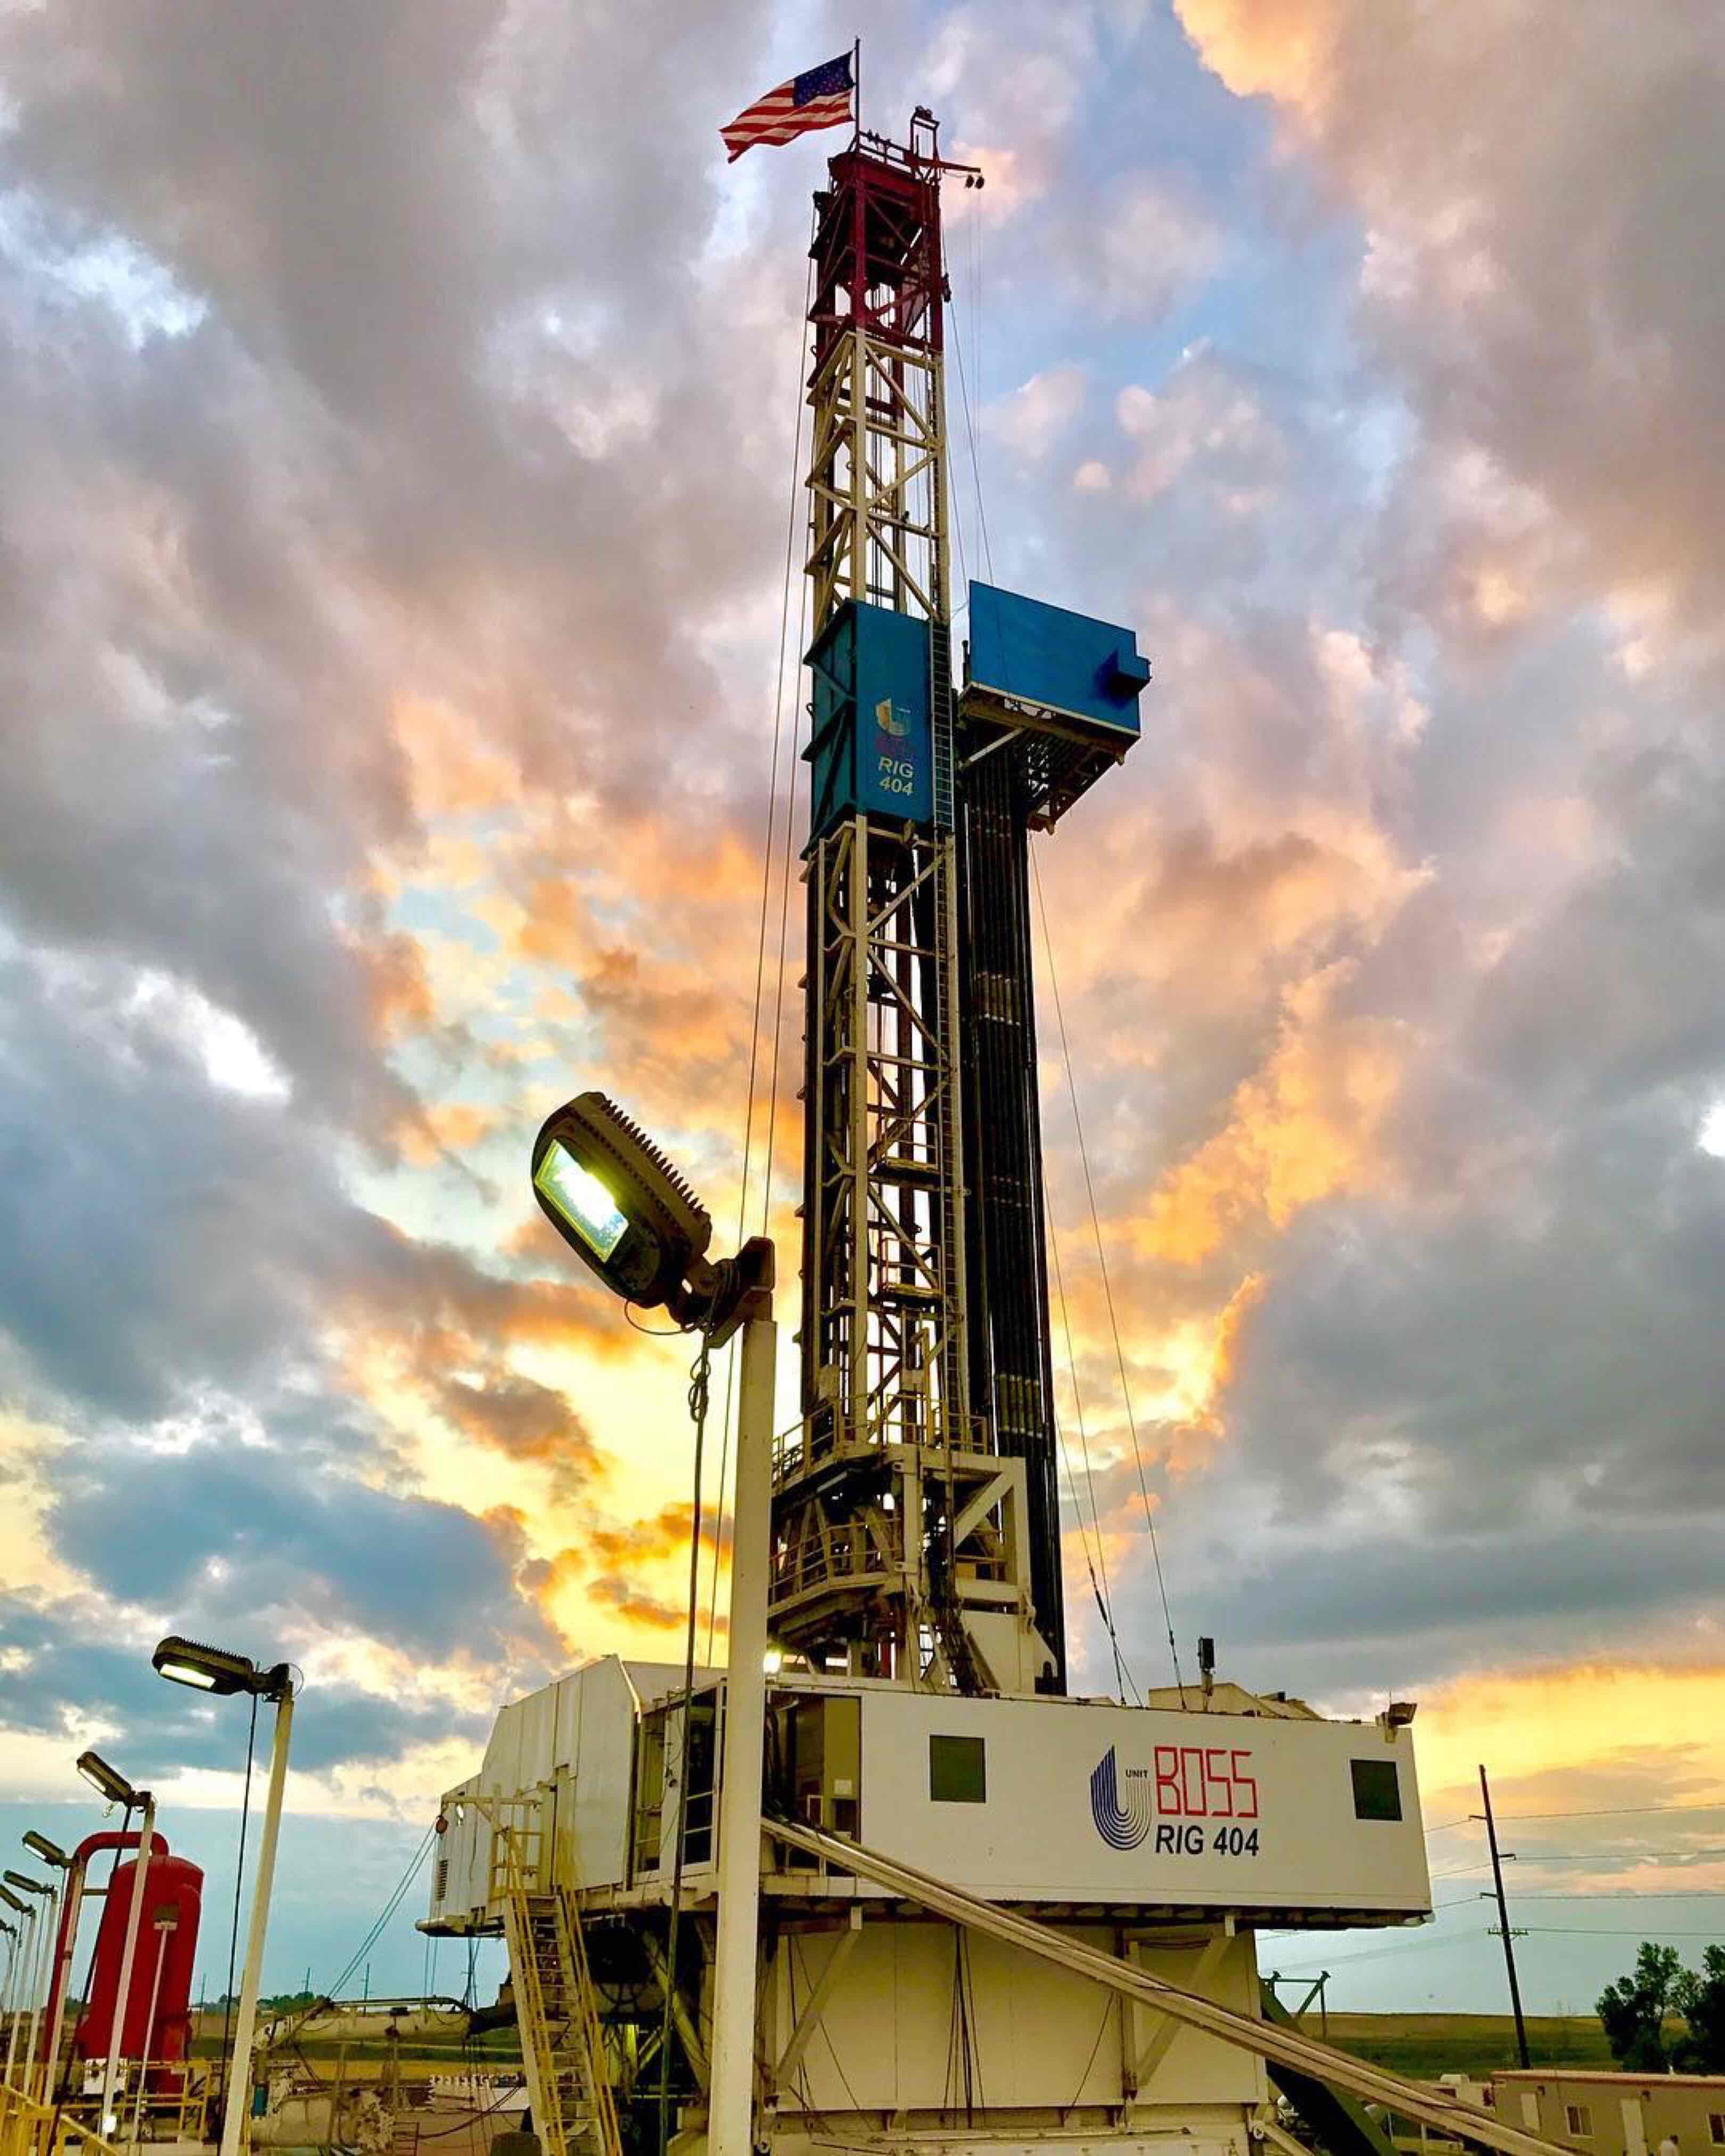 Last hitch in #NorthDakota...for now. #bakken #oilfield #drillingrig #sunset #skyporn #drillersclub @s.h.warner | Petroleum engineering, Oil rig, Drilling rig